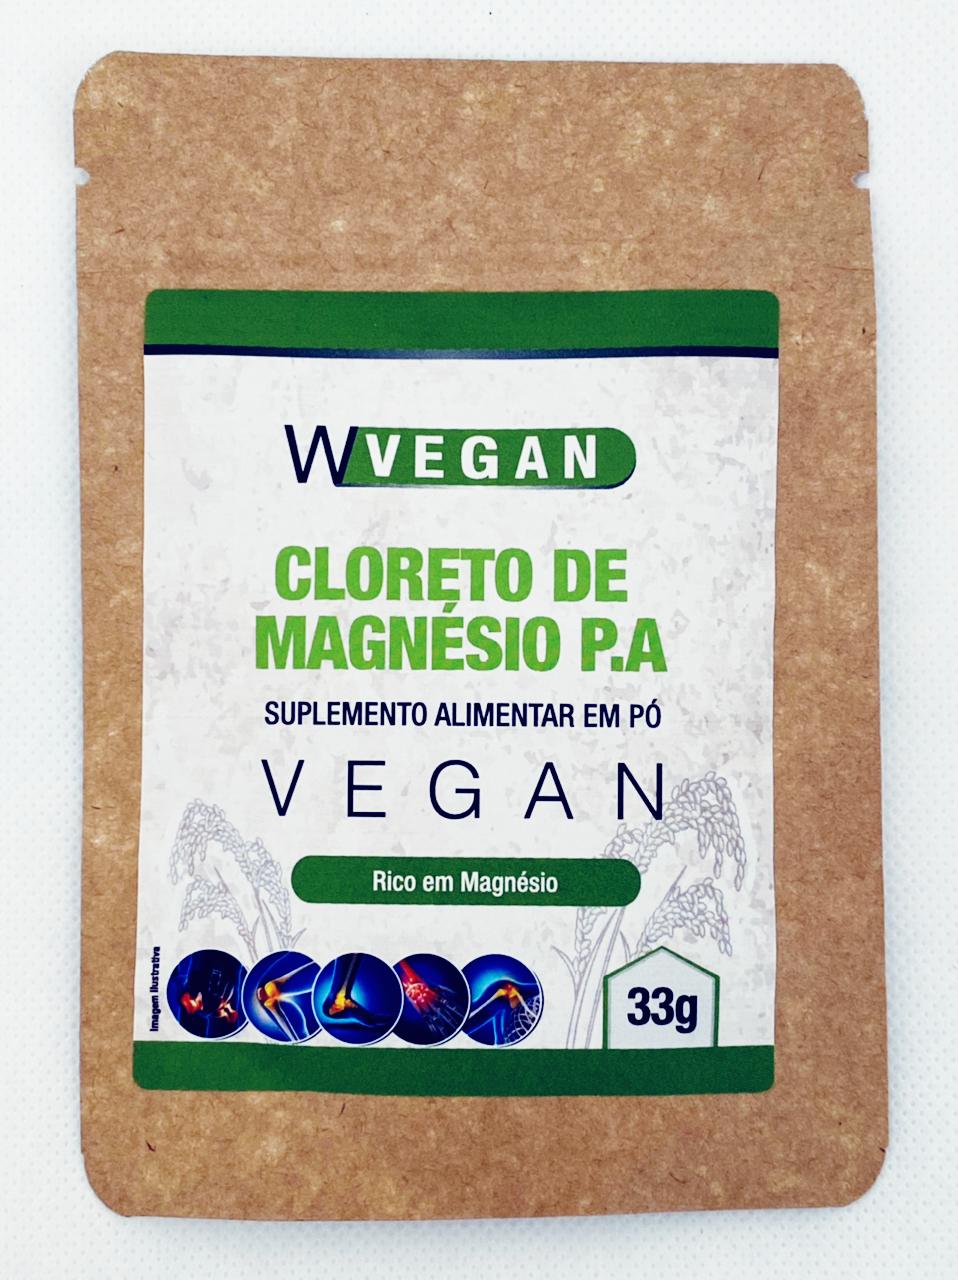 Cloreto de magnésio hexahidratado PA  1 sache de 33g WVegan Vegano